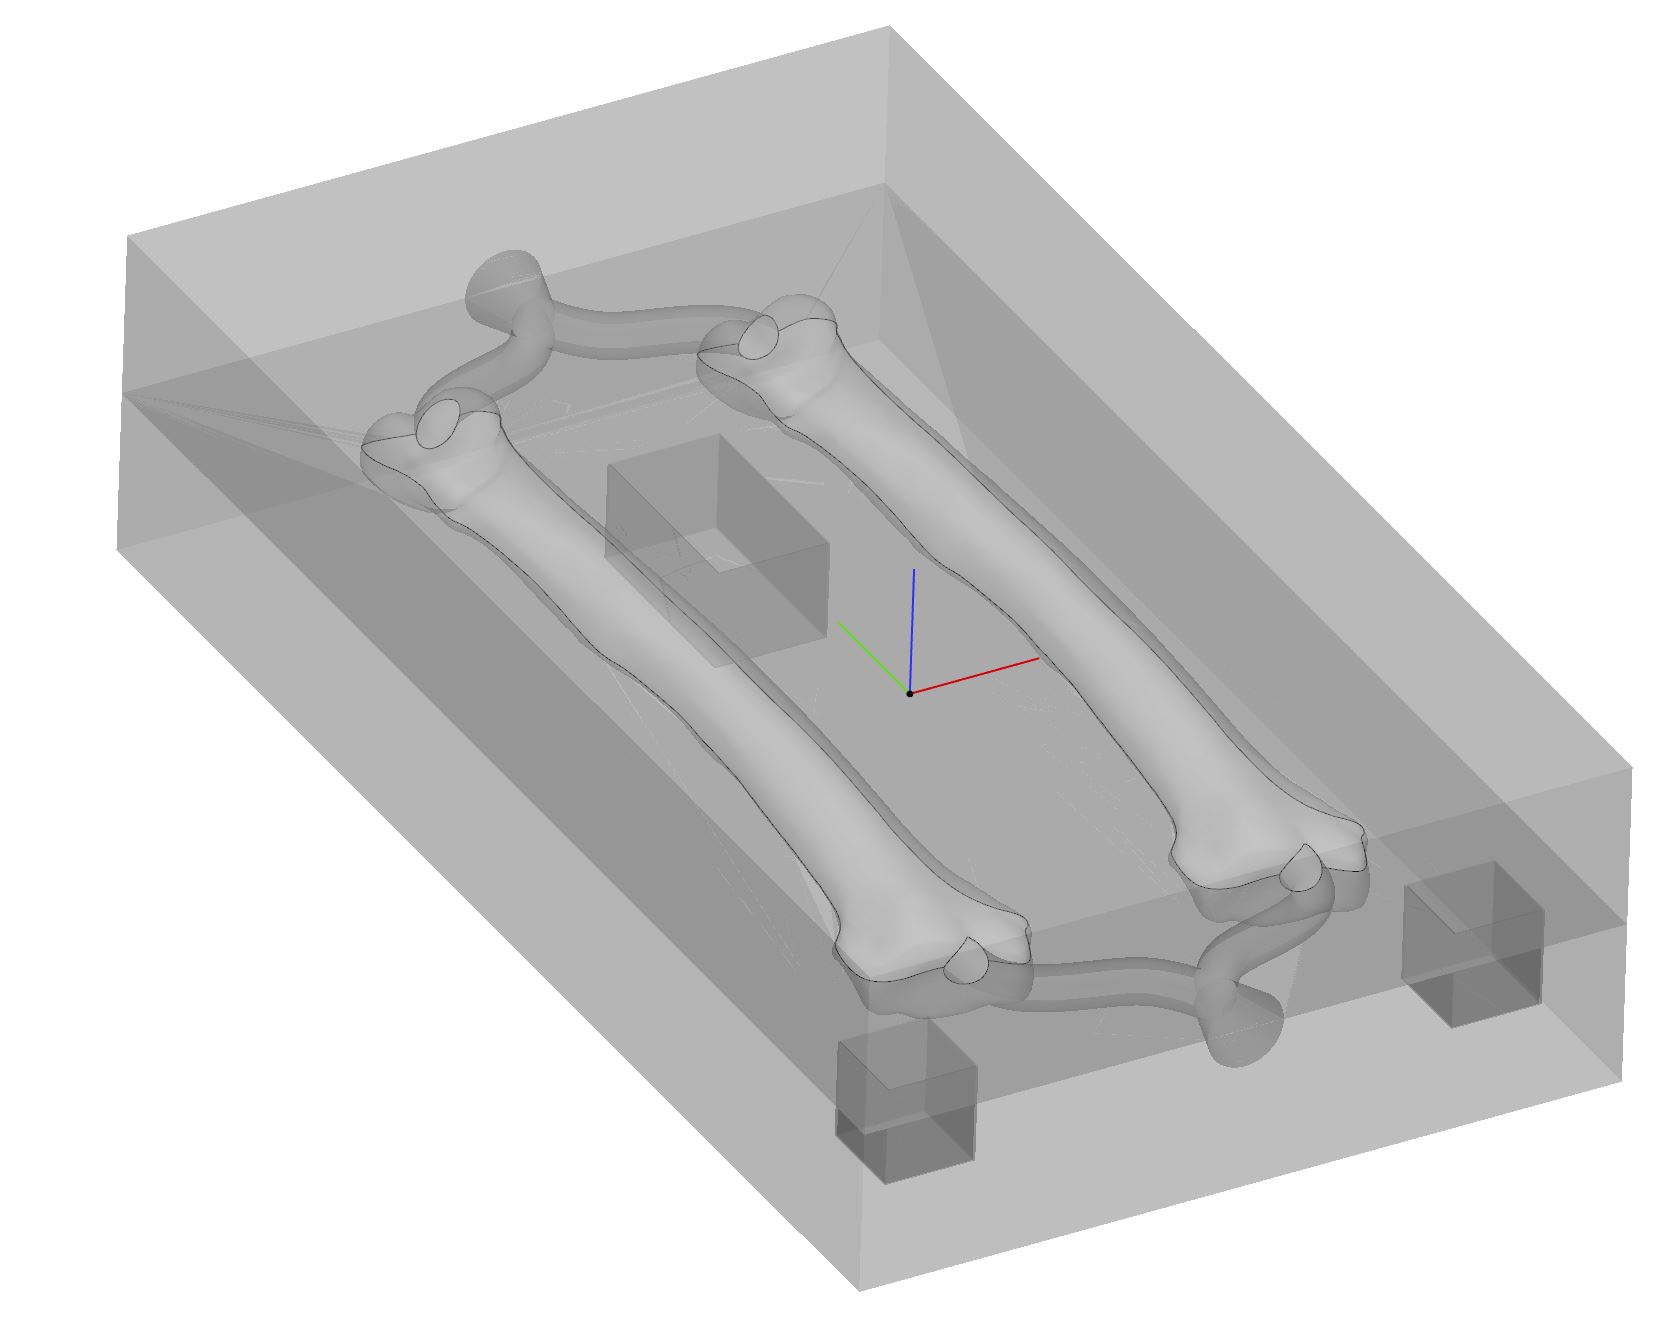 Design of Mold for Artificial Radii Bones